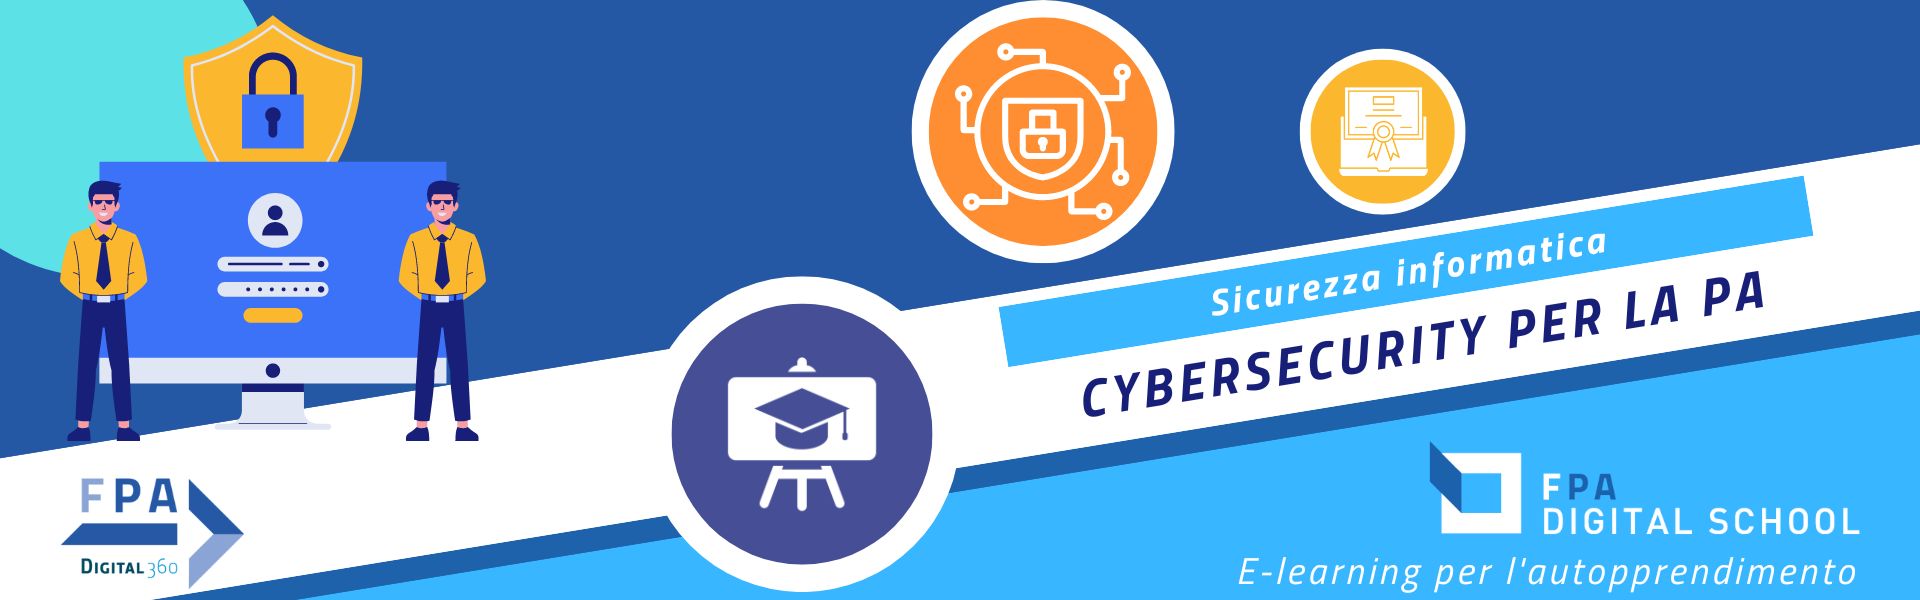 banner corso Cyber security